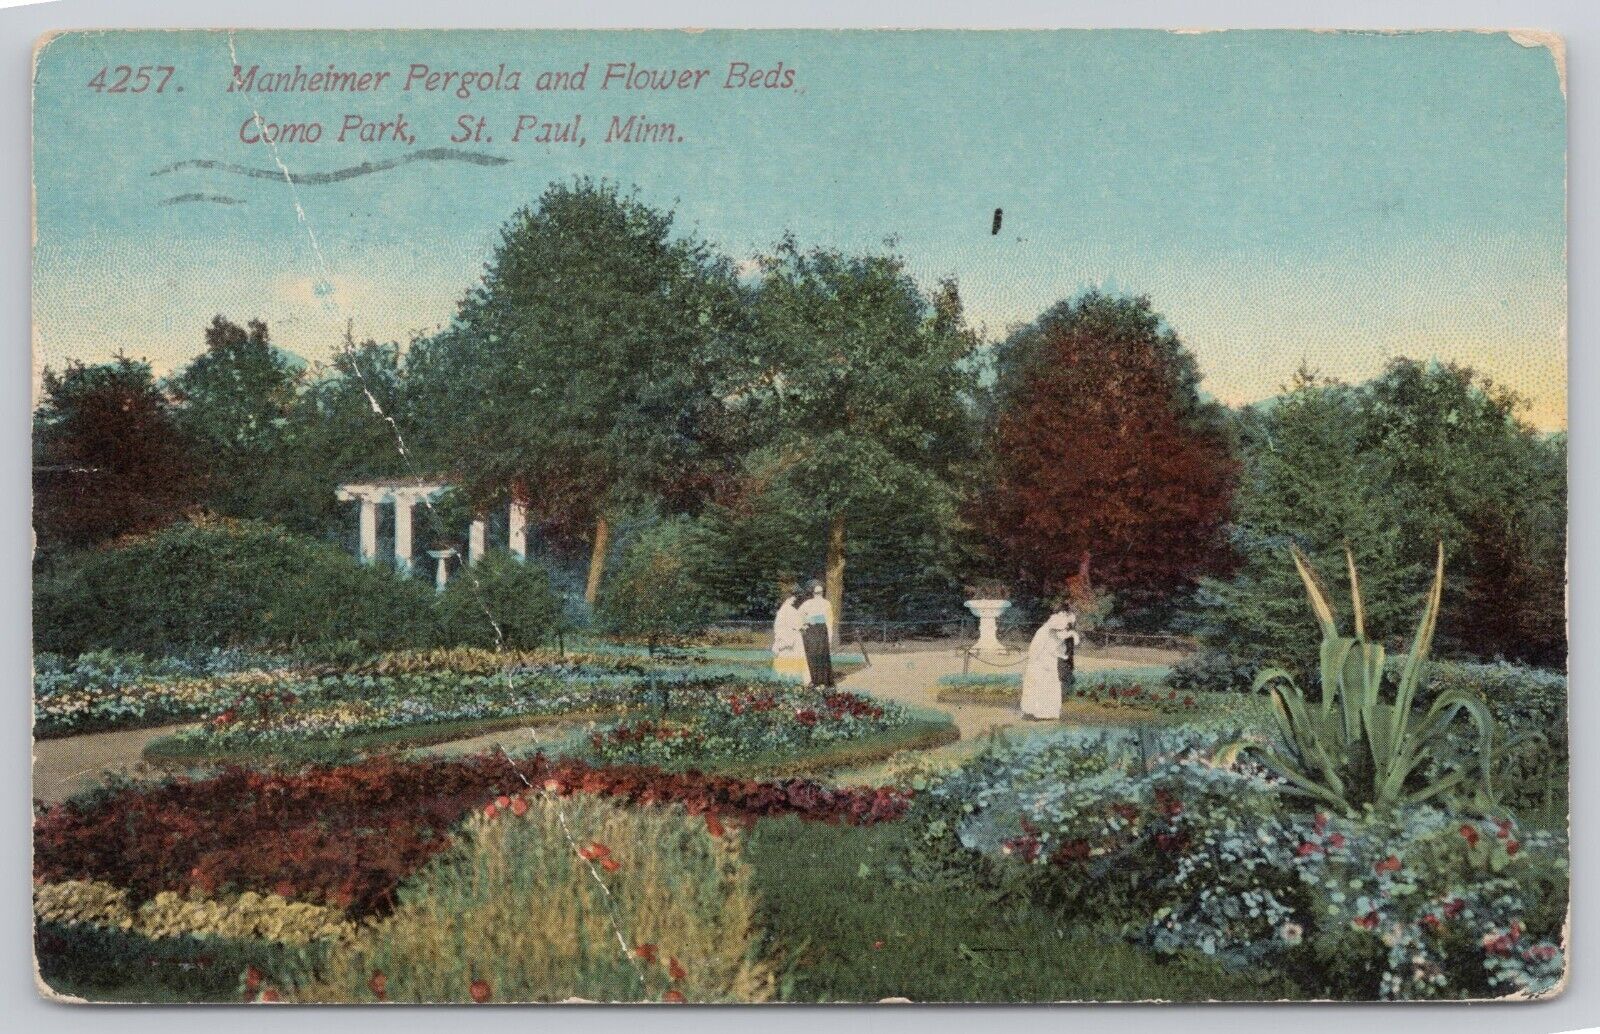 Vtg Post Card Manheimer Pergola & Flower Beds, Como Park, St. Paul Minn. A365